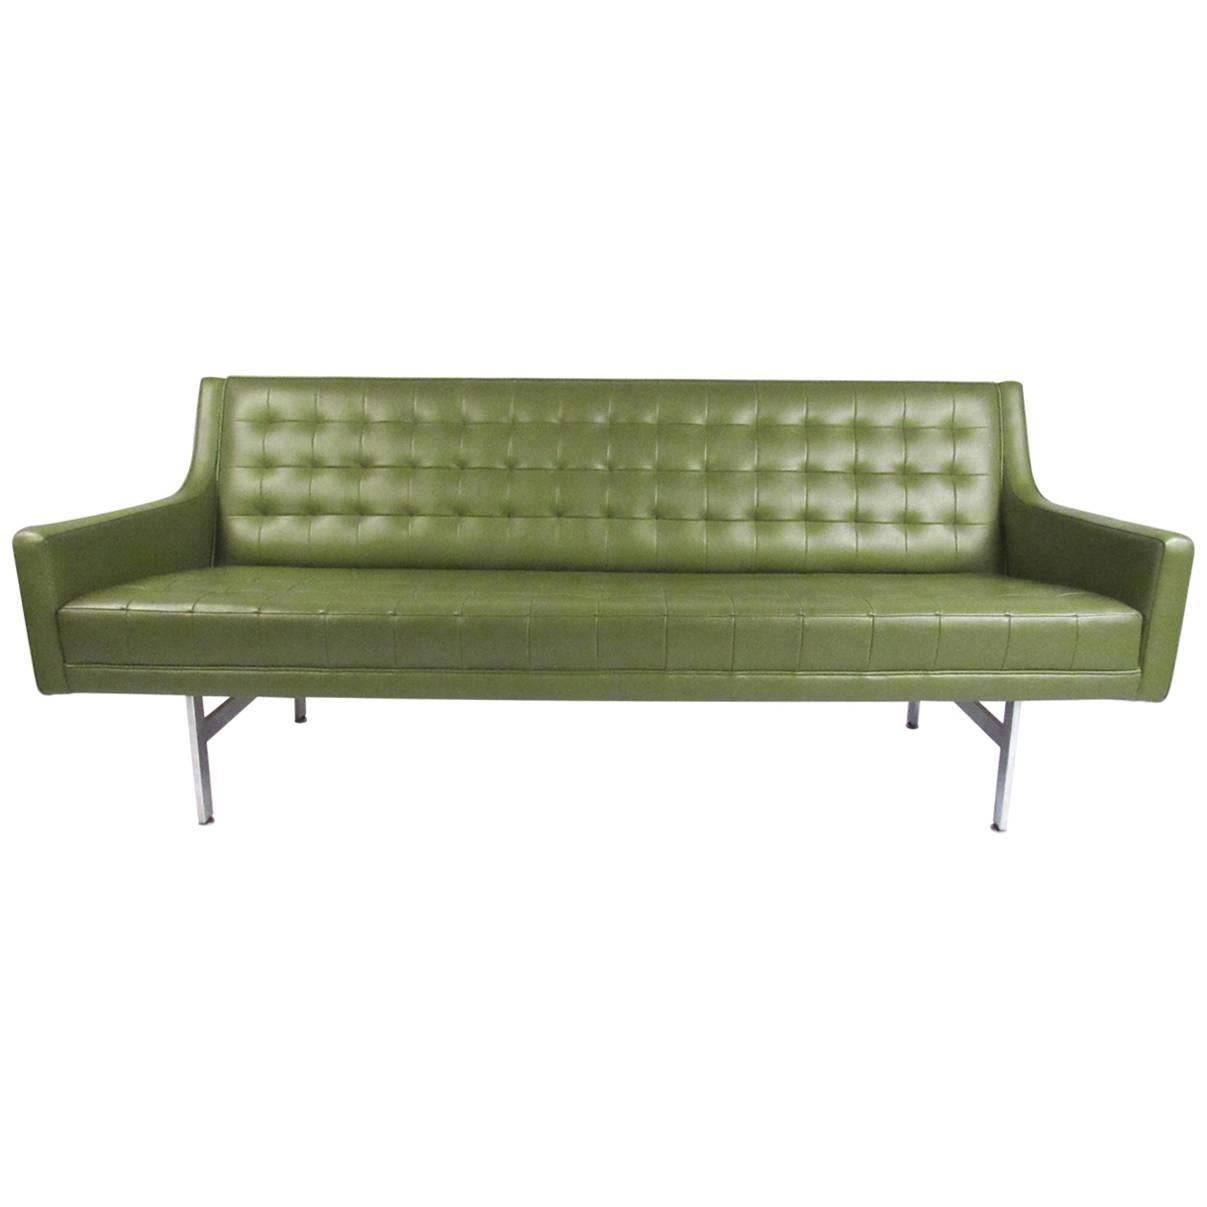 Stylish Vintage Modern Sofa in Tufted Green Vinyl